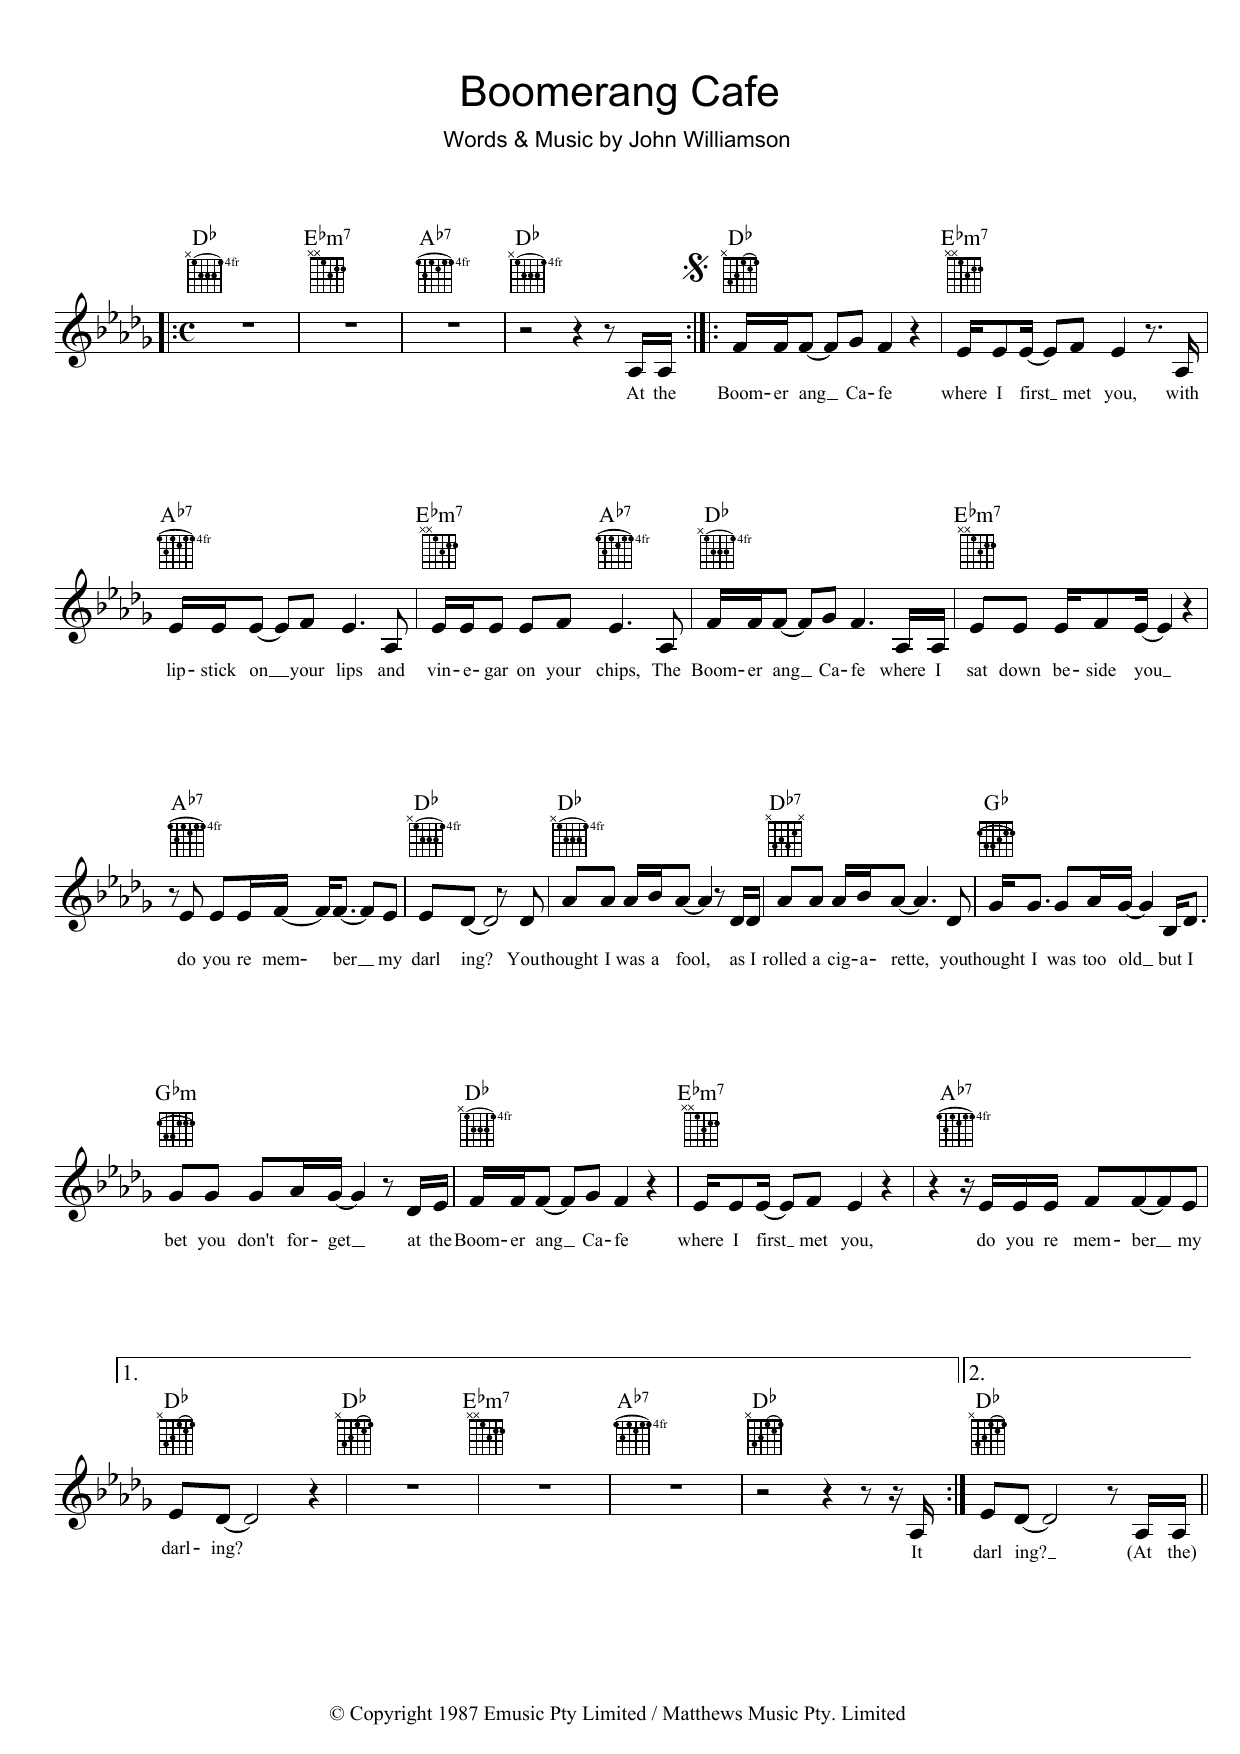 John Williamson Boomerang Cafe Sheet Music Notes & Chords for Melody Line, Lyrics & Chords - Download or Print PDF